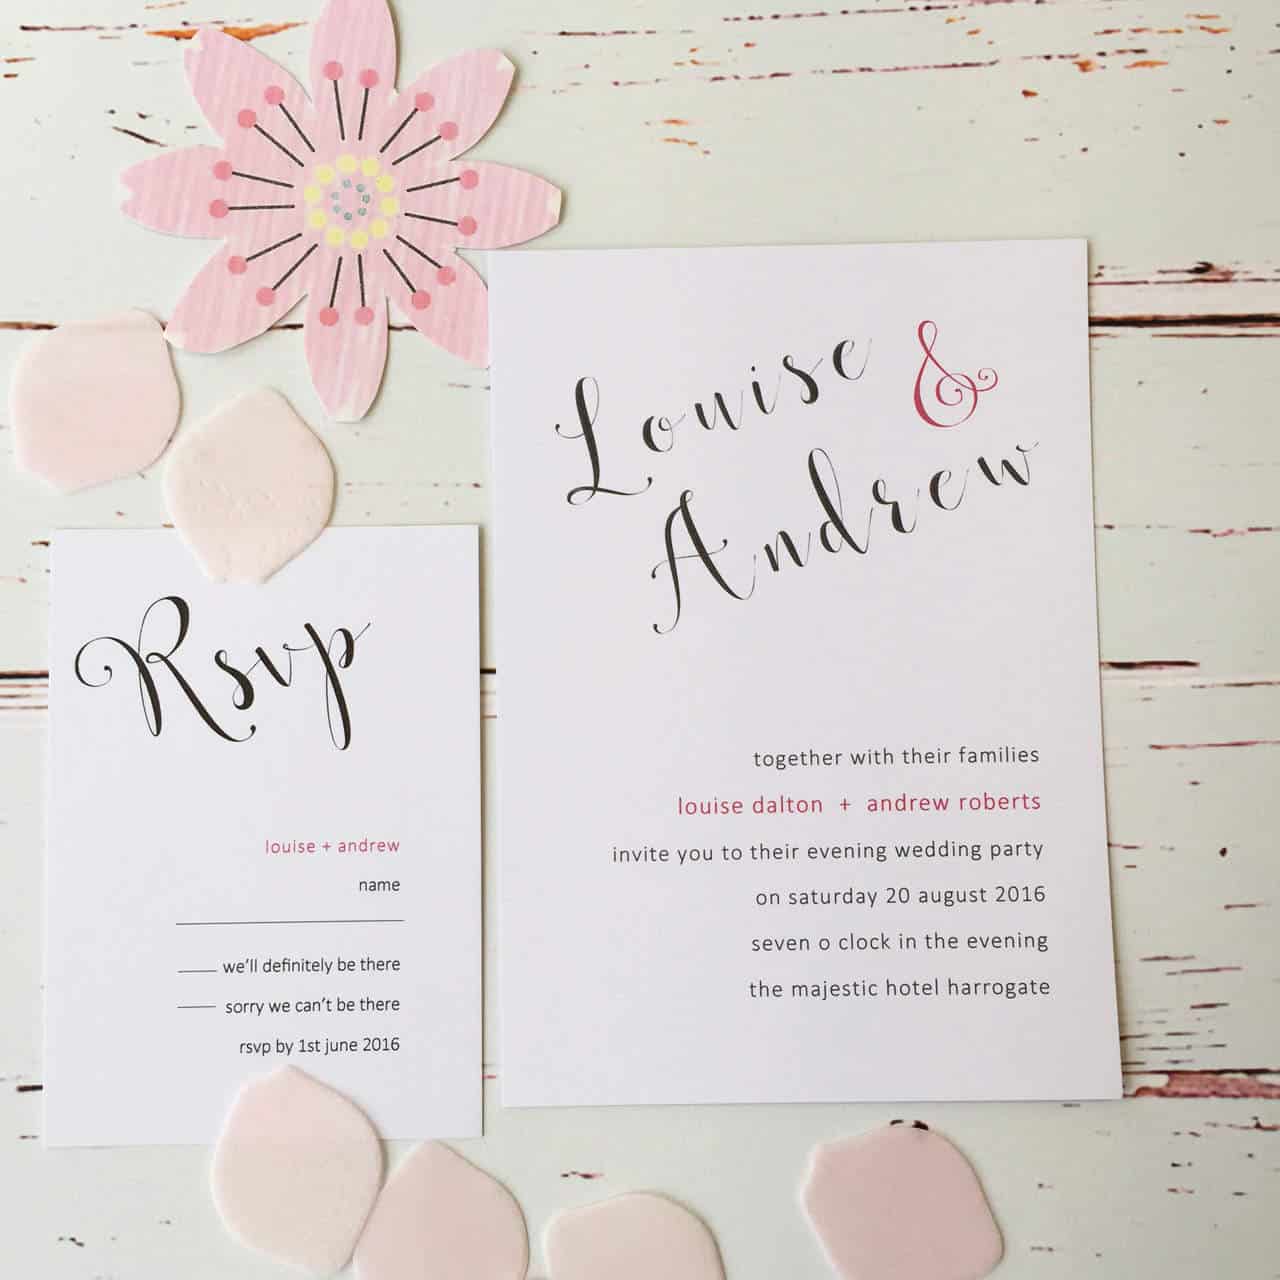 A trendy modern pink wedding invitation